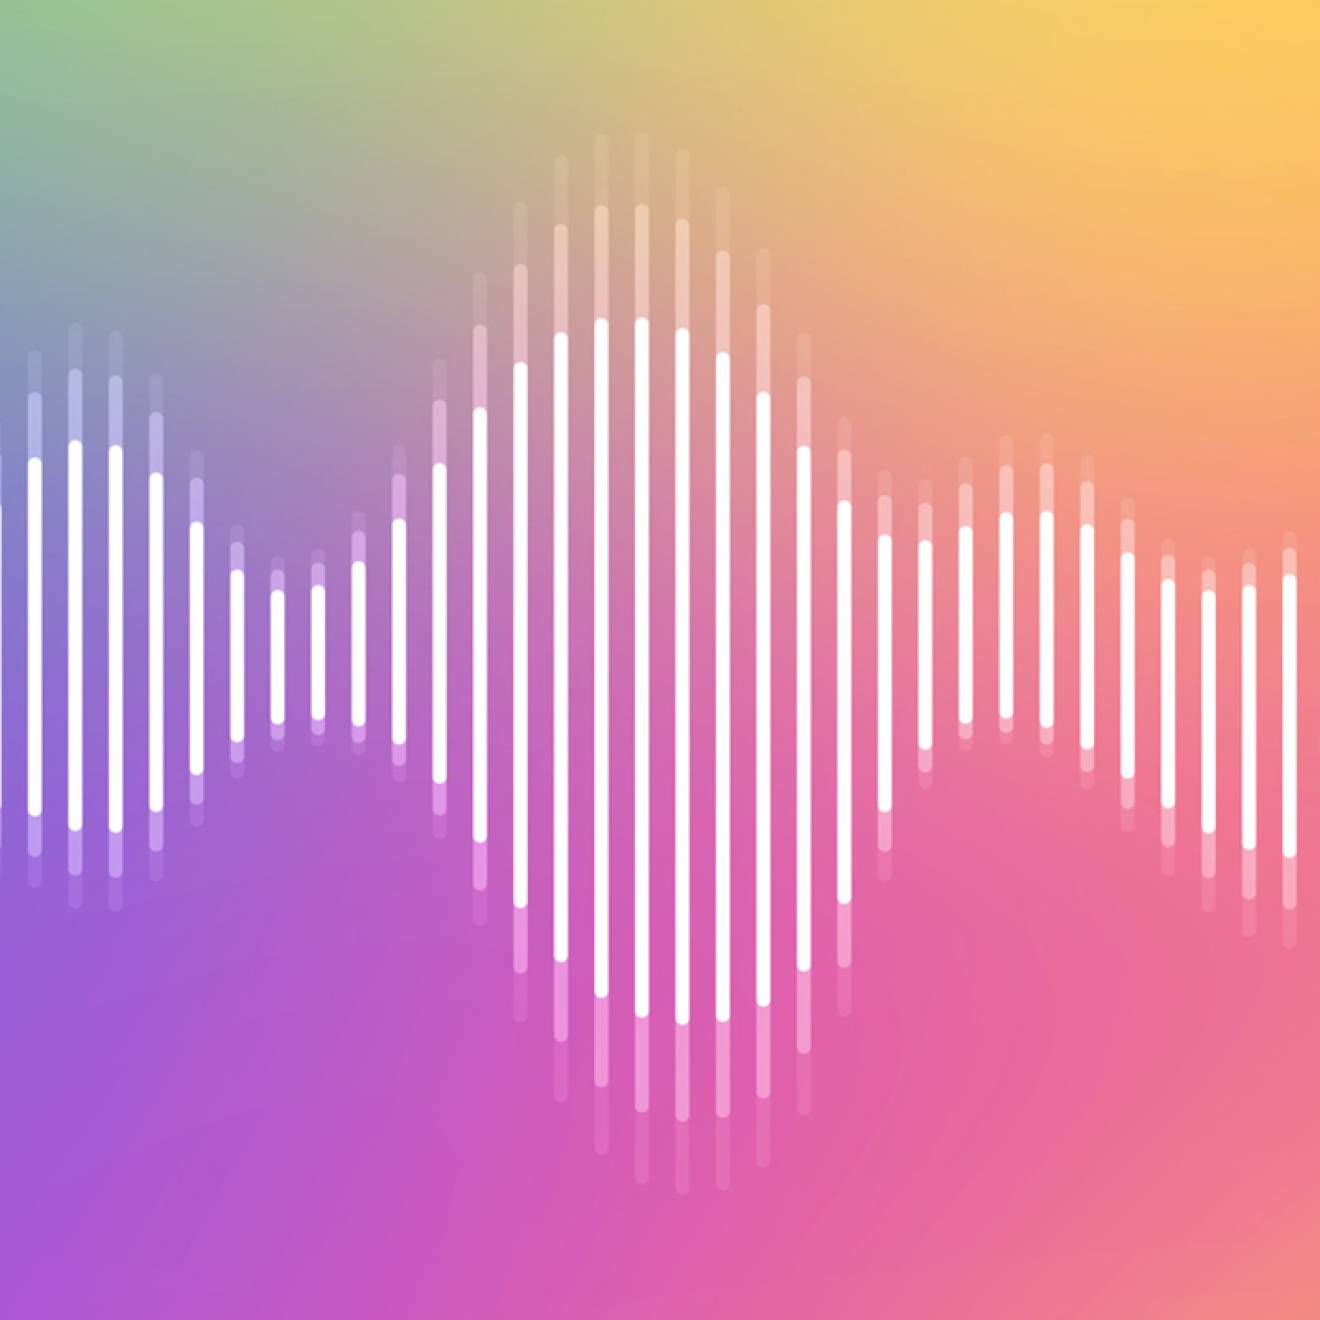 A rainbow-hued visualization of an audio wave